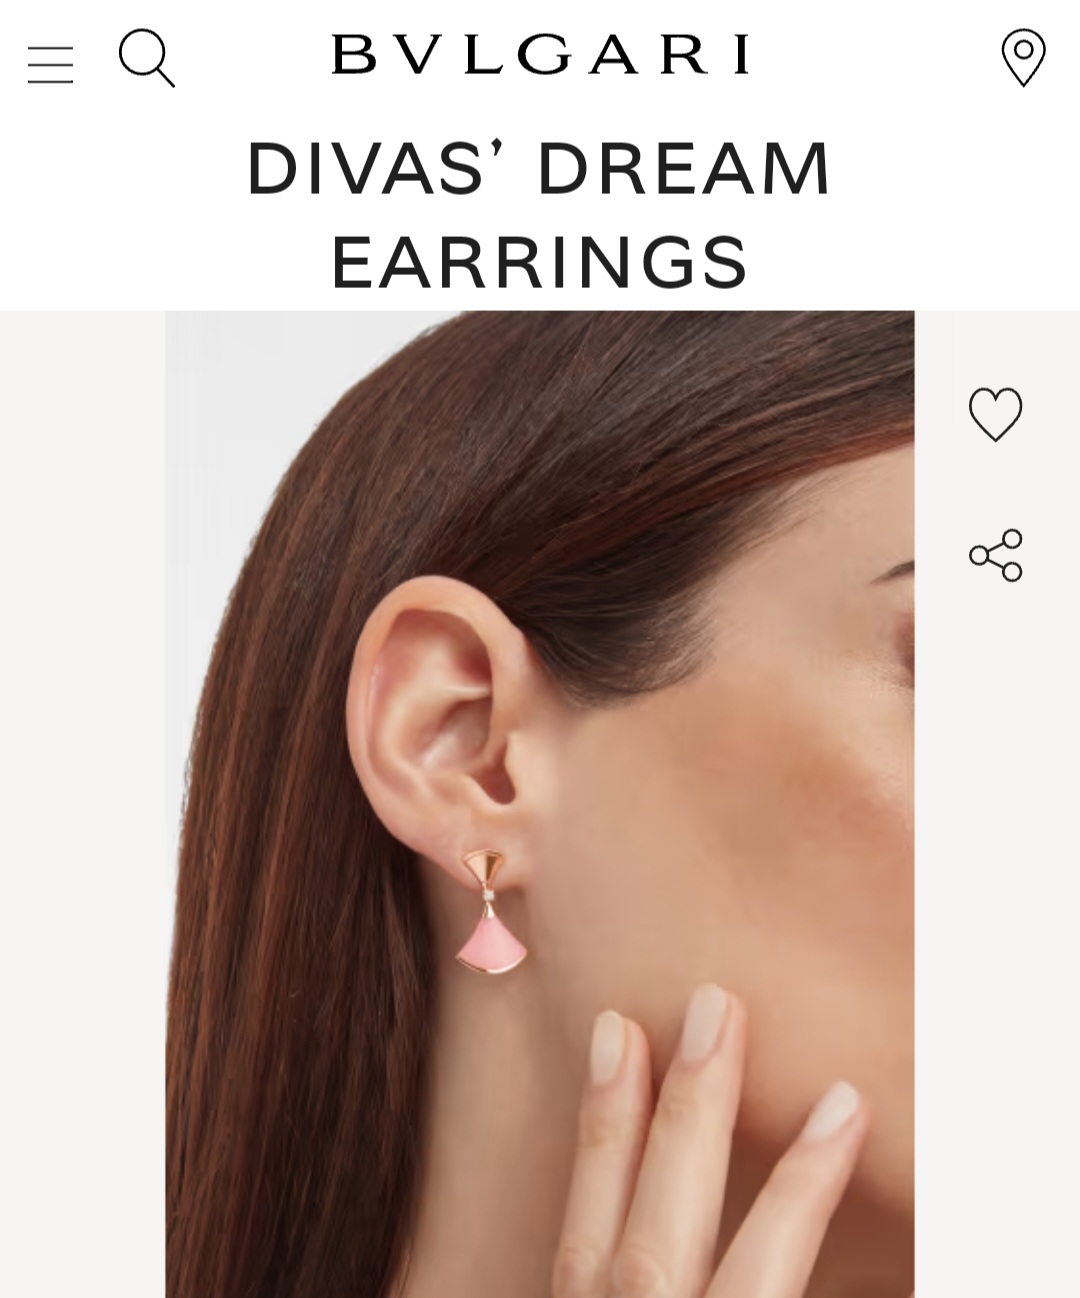 Bvlgari Divas’ dream earrings